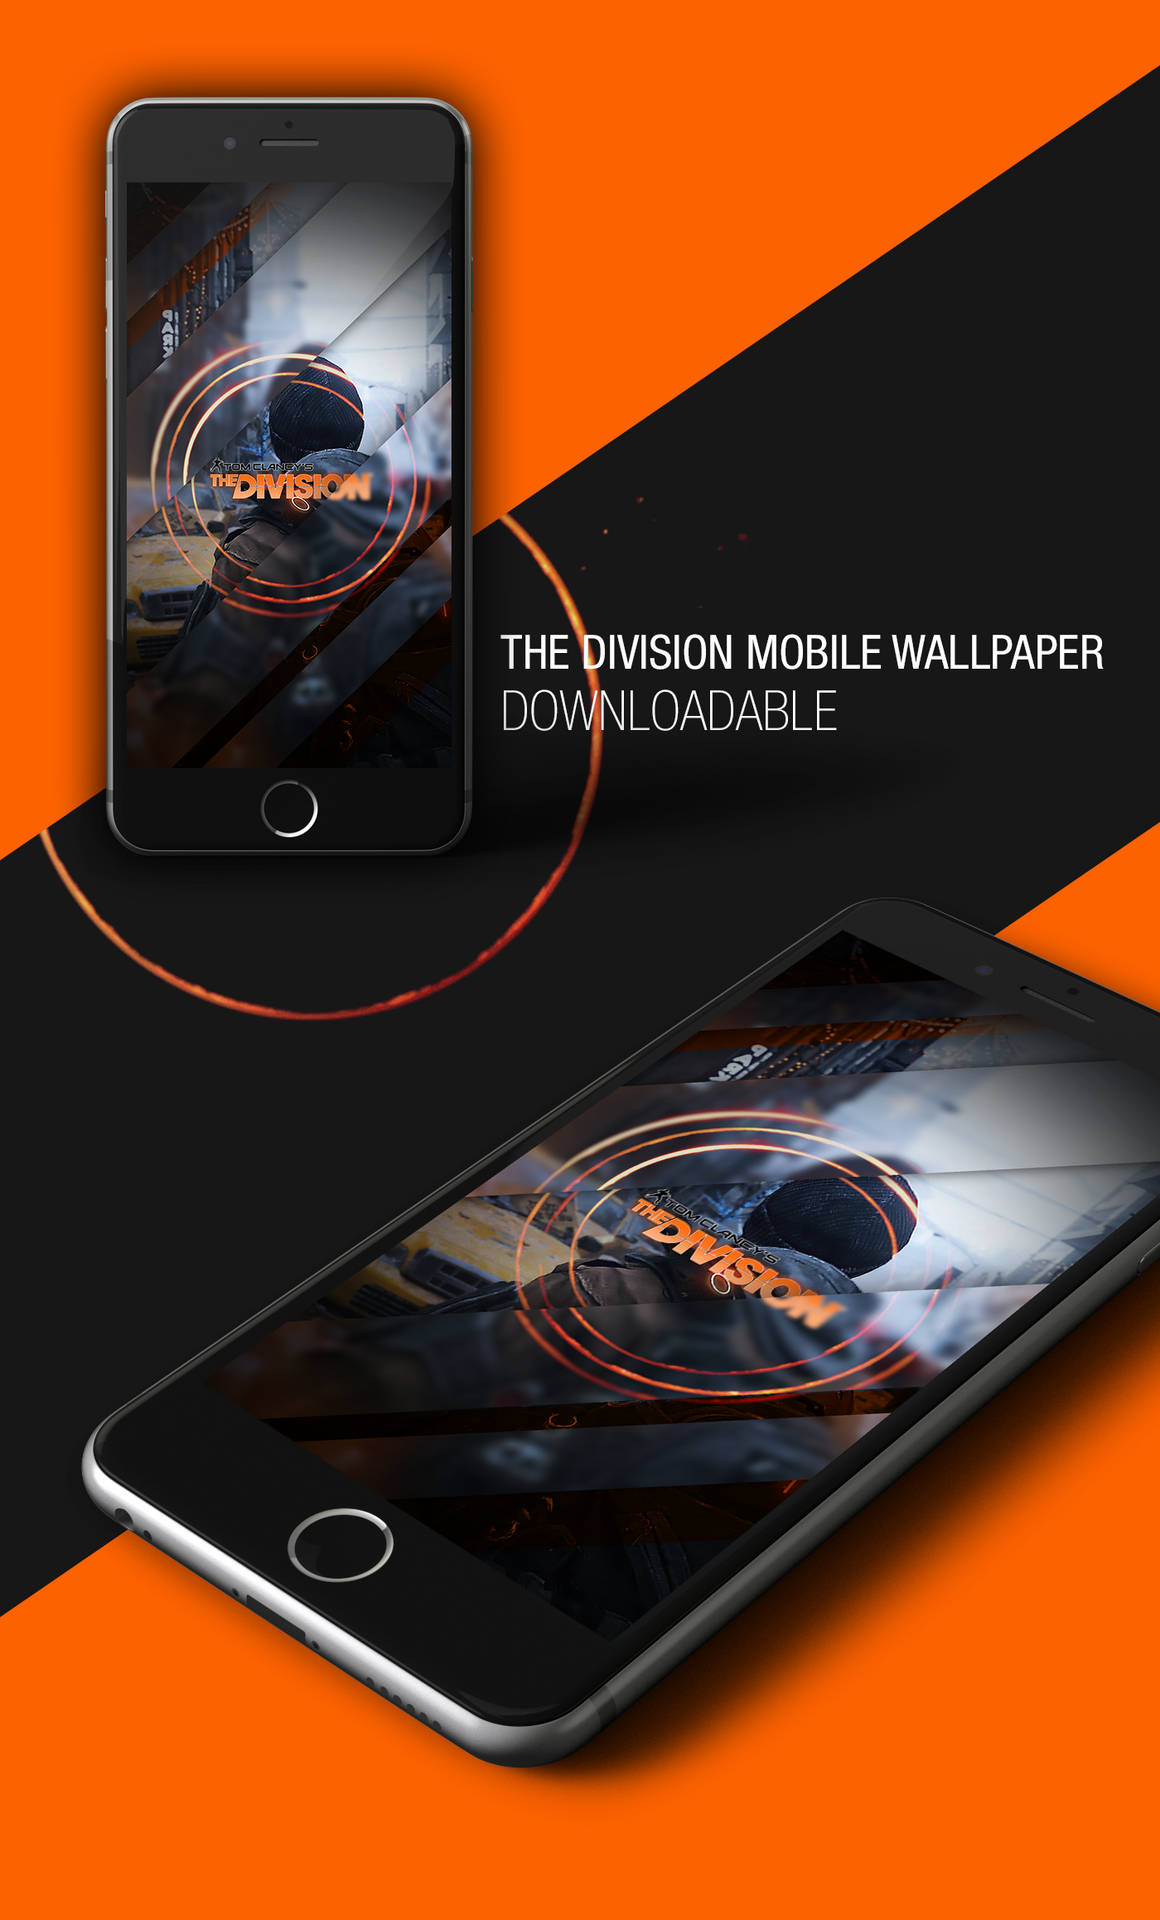 Den Vodoo Mobile Wallpaper-skærmbillede Wallpaper